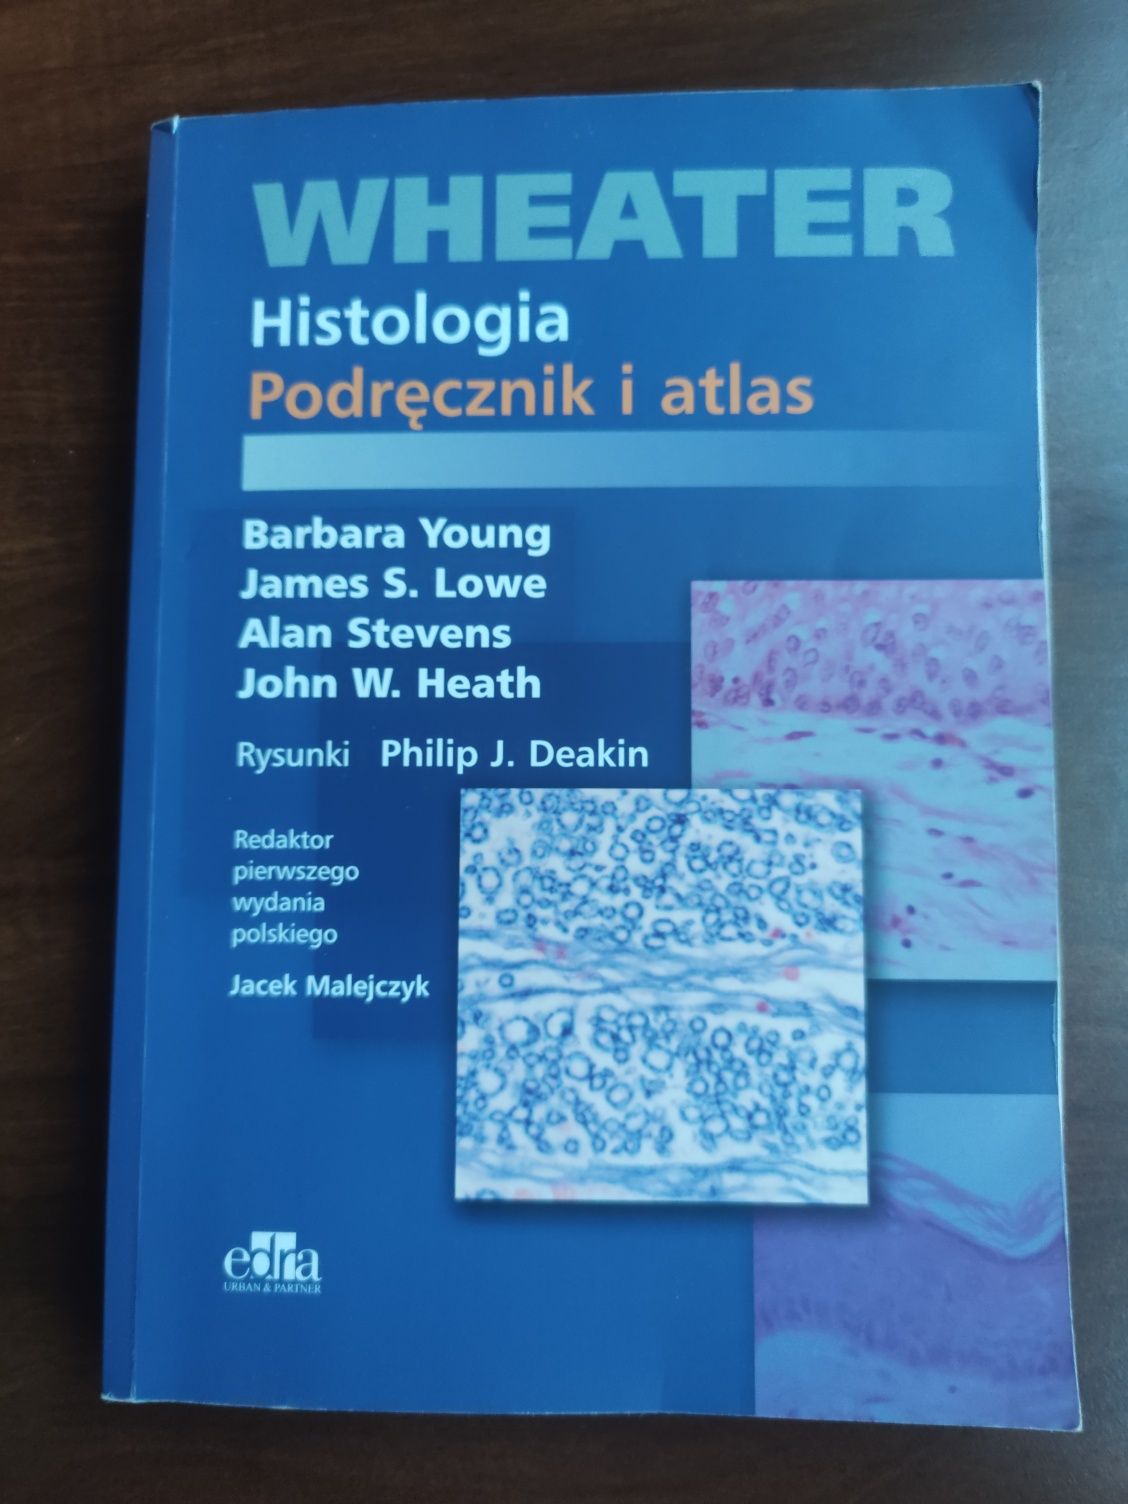 Histologia wheather podręcznik i atlas